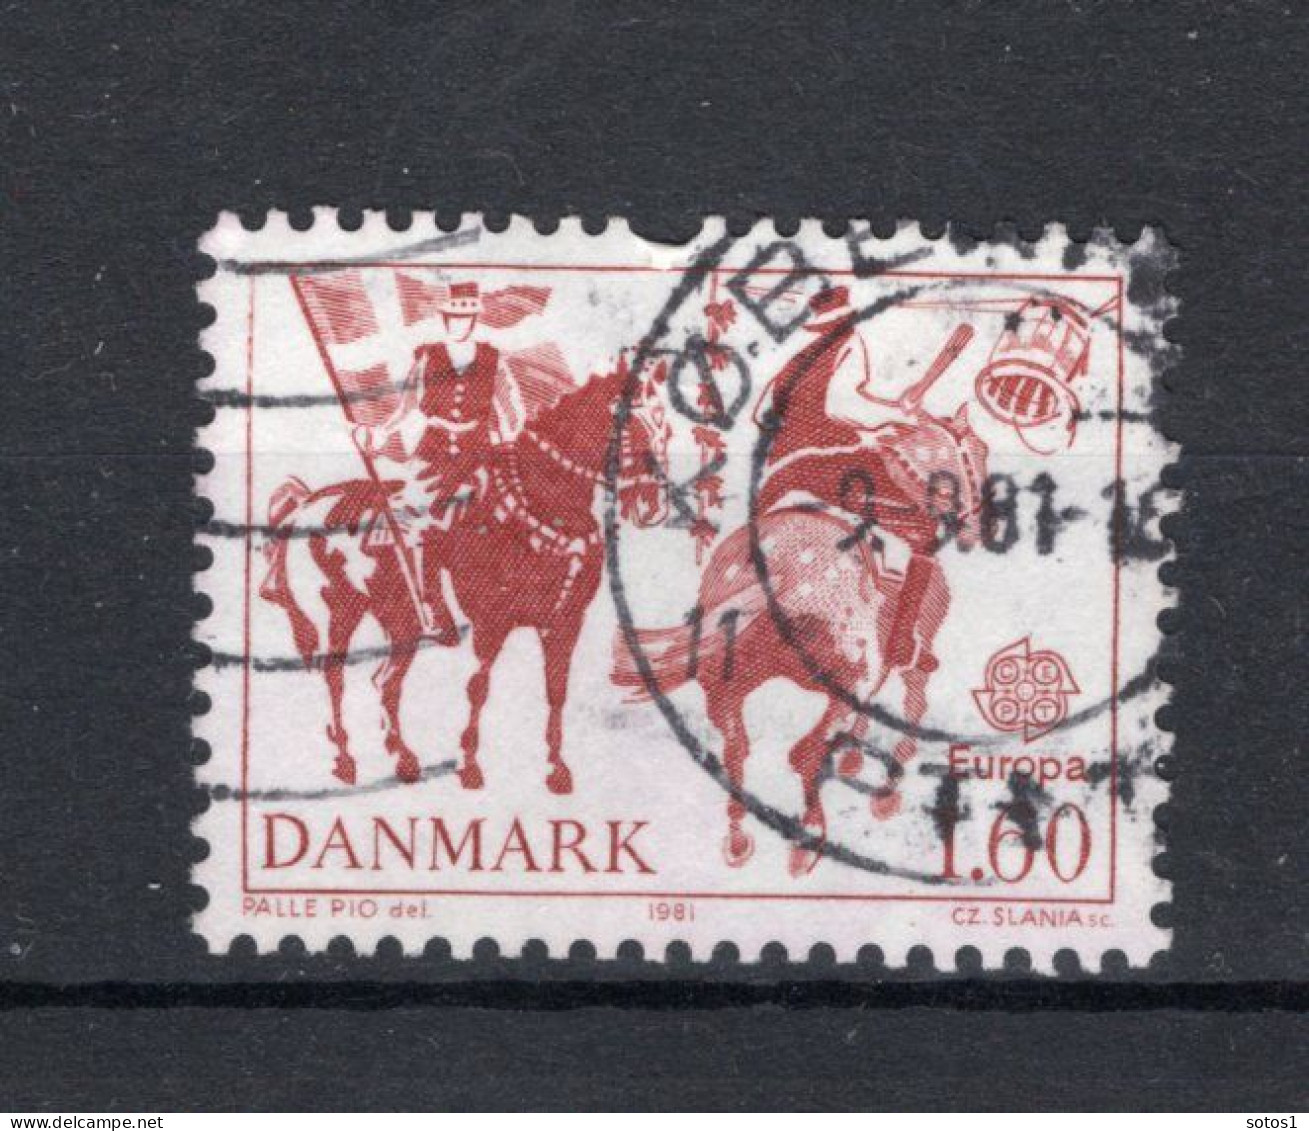 (B) Denemarken CEPT 730° Gestempeld 1981 - 1981